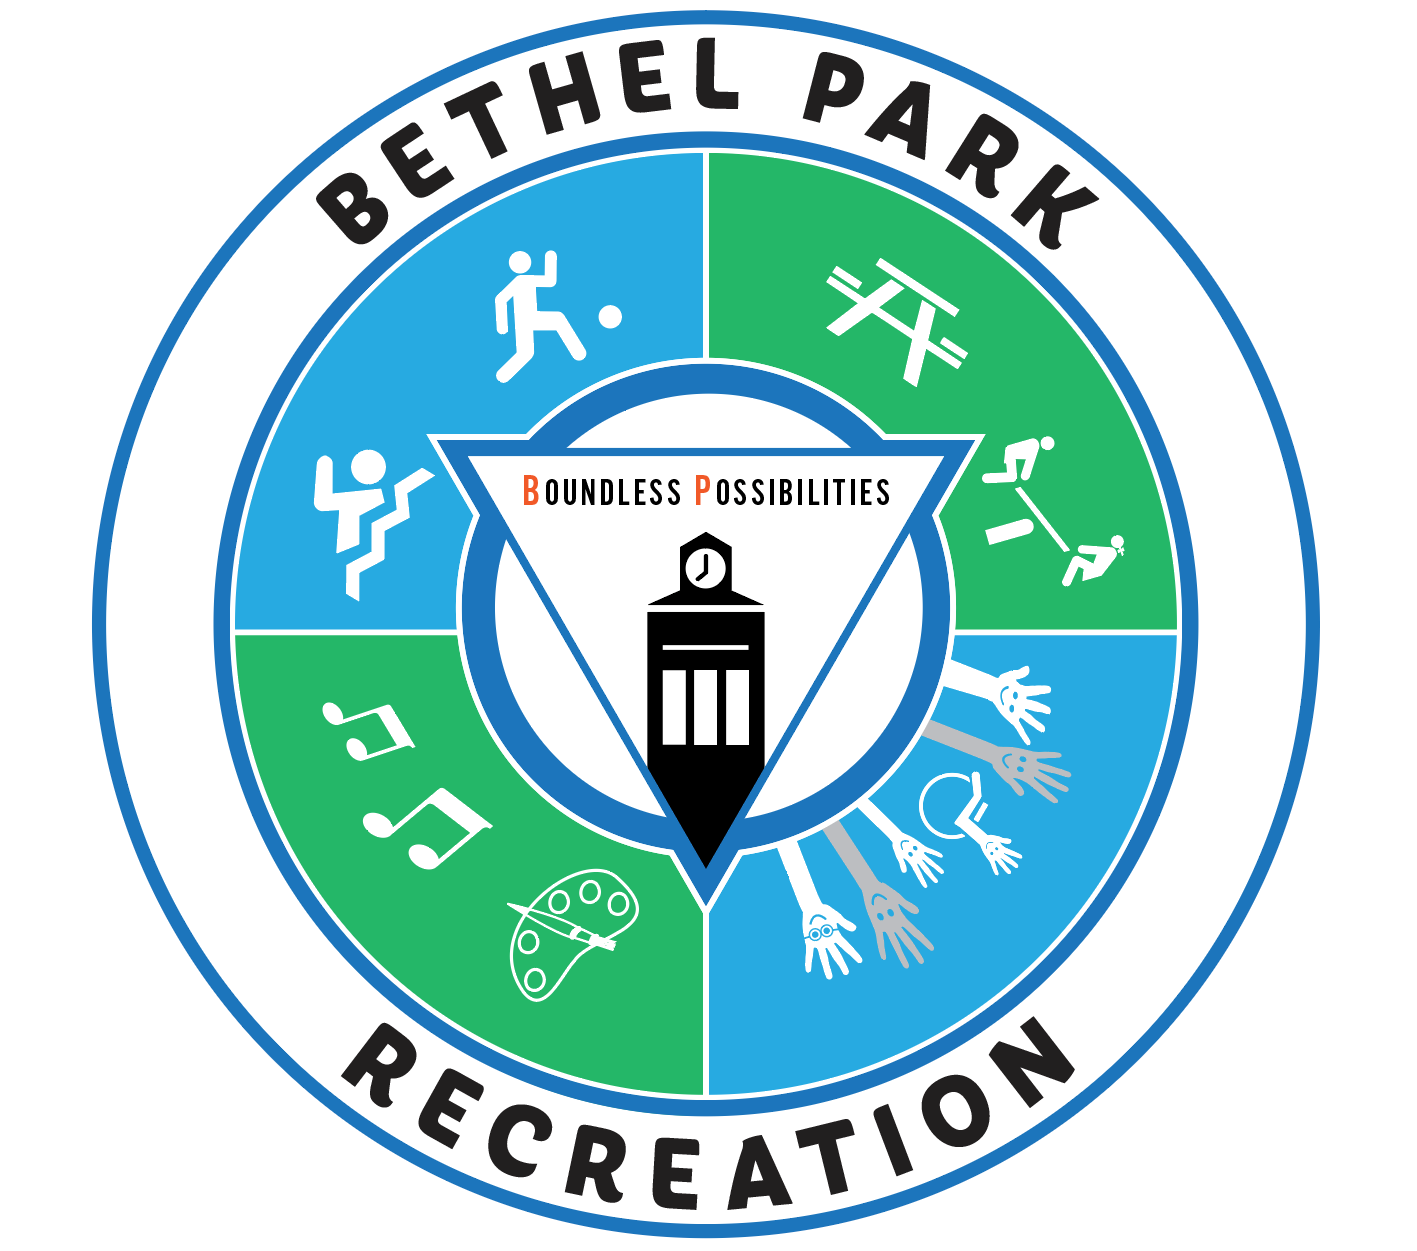 Bethel park community center